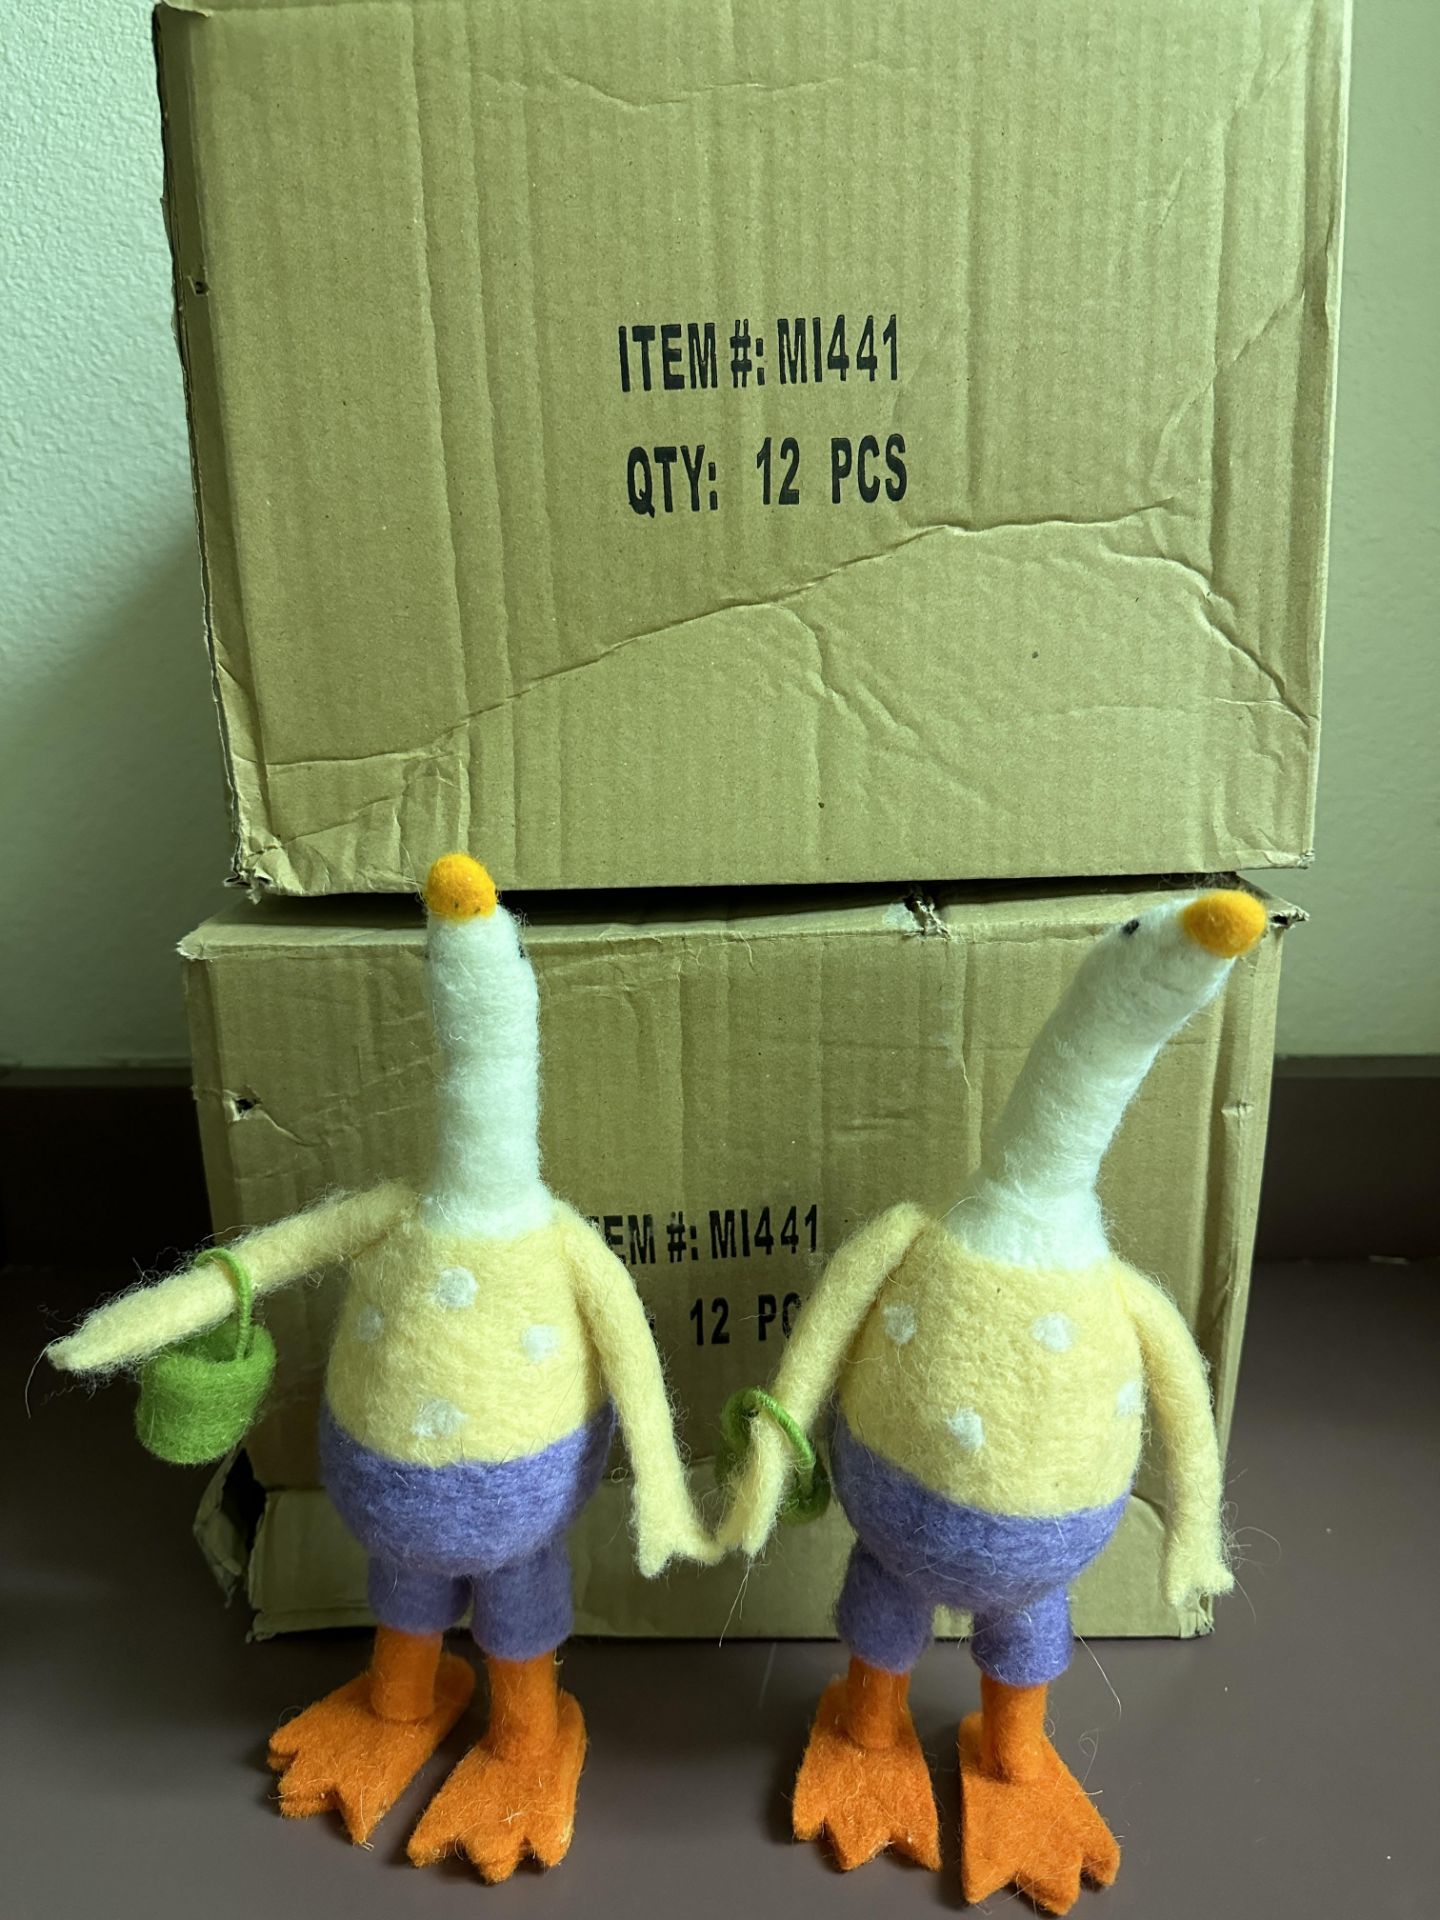 20x Goose Geese Plush Toys, Decorations, 8" MI441x2 - Image 2 of 4